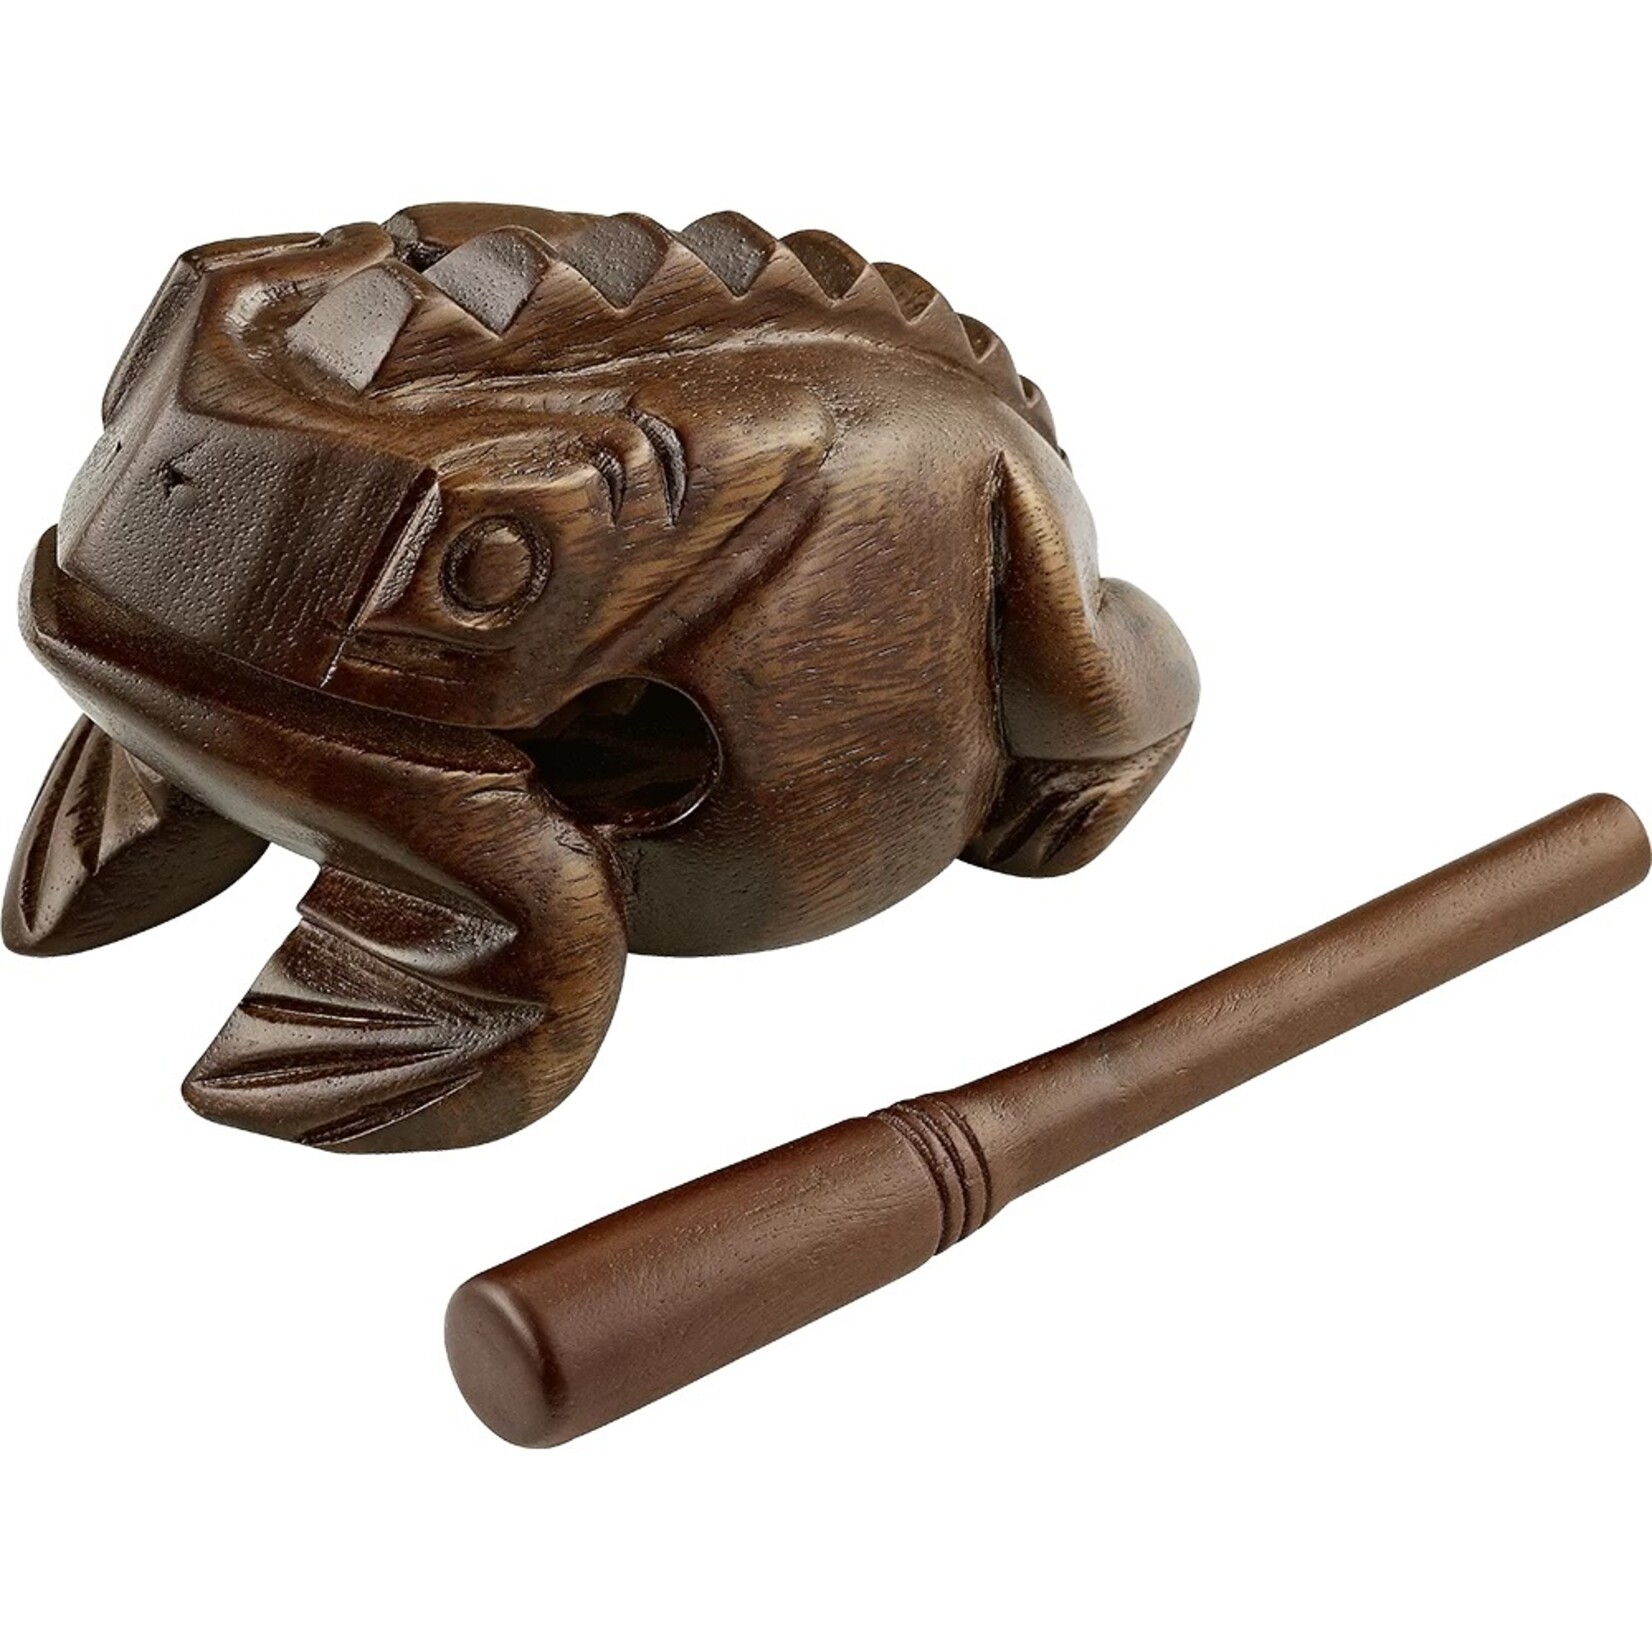 Meinl Meinl wooden frog, large, brown